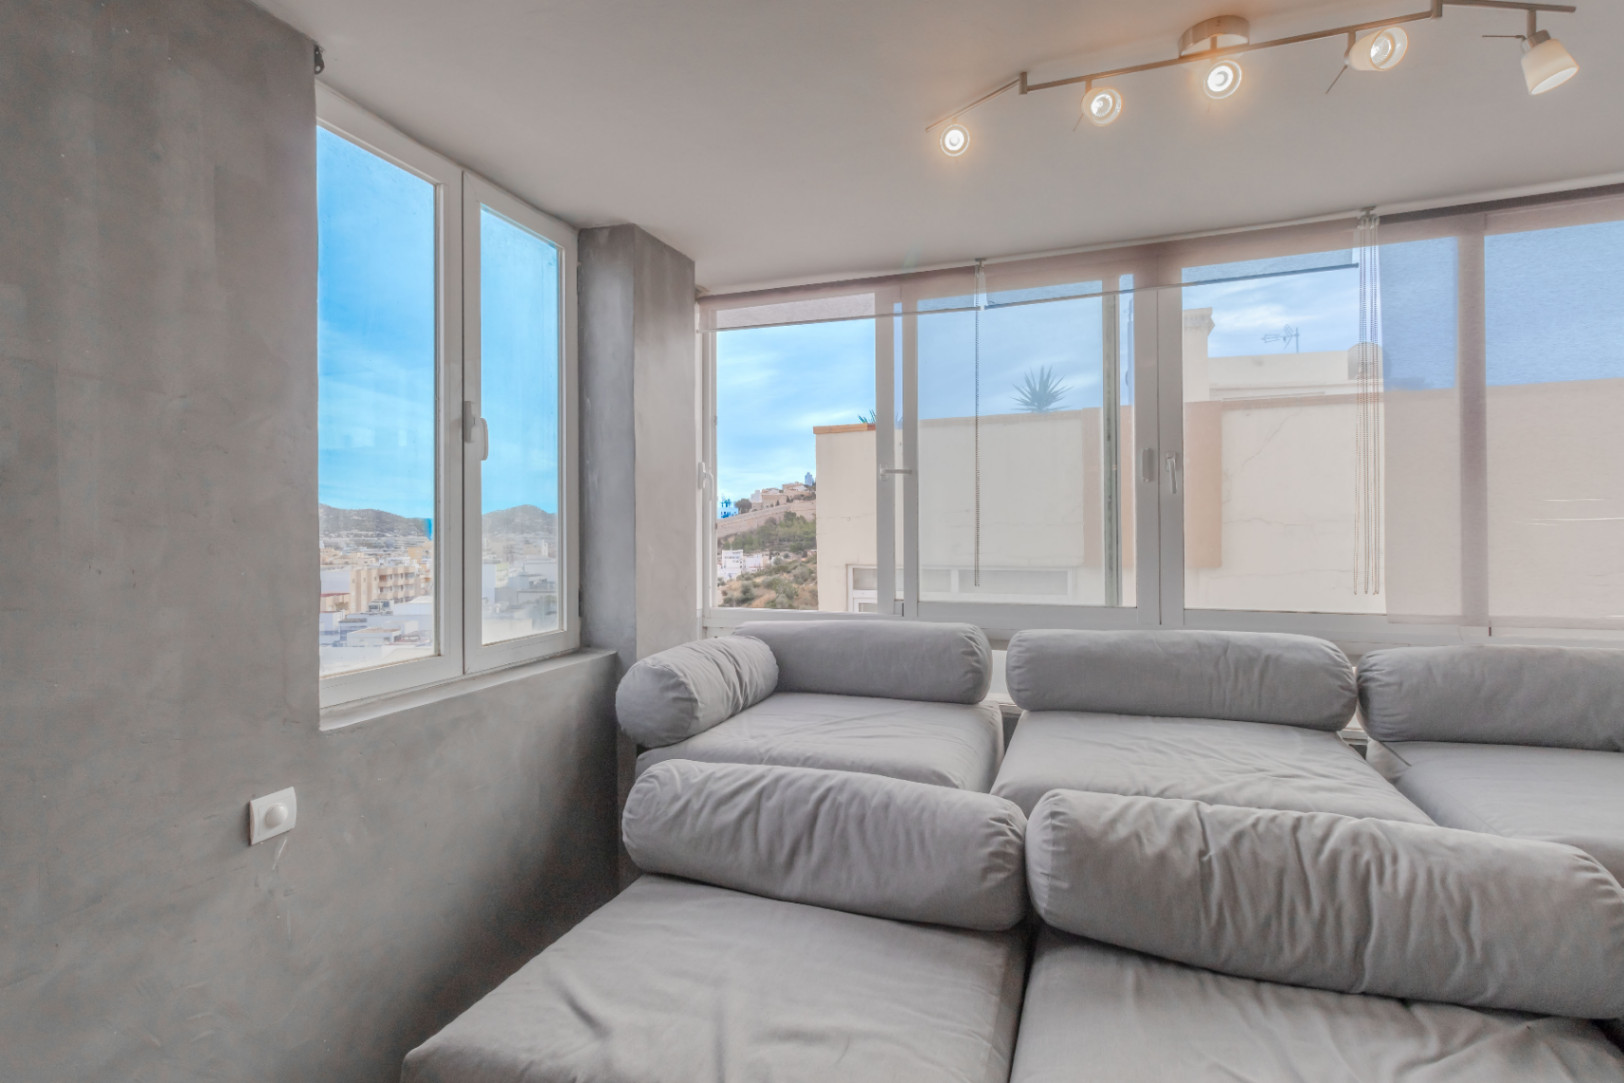 Apartment in Ibiza with views of Dalt Vila